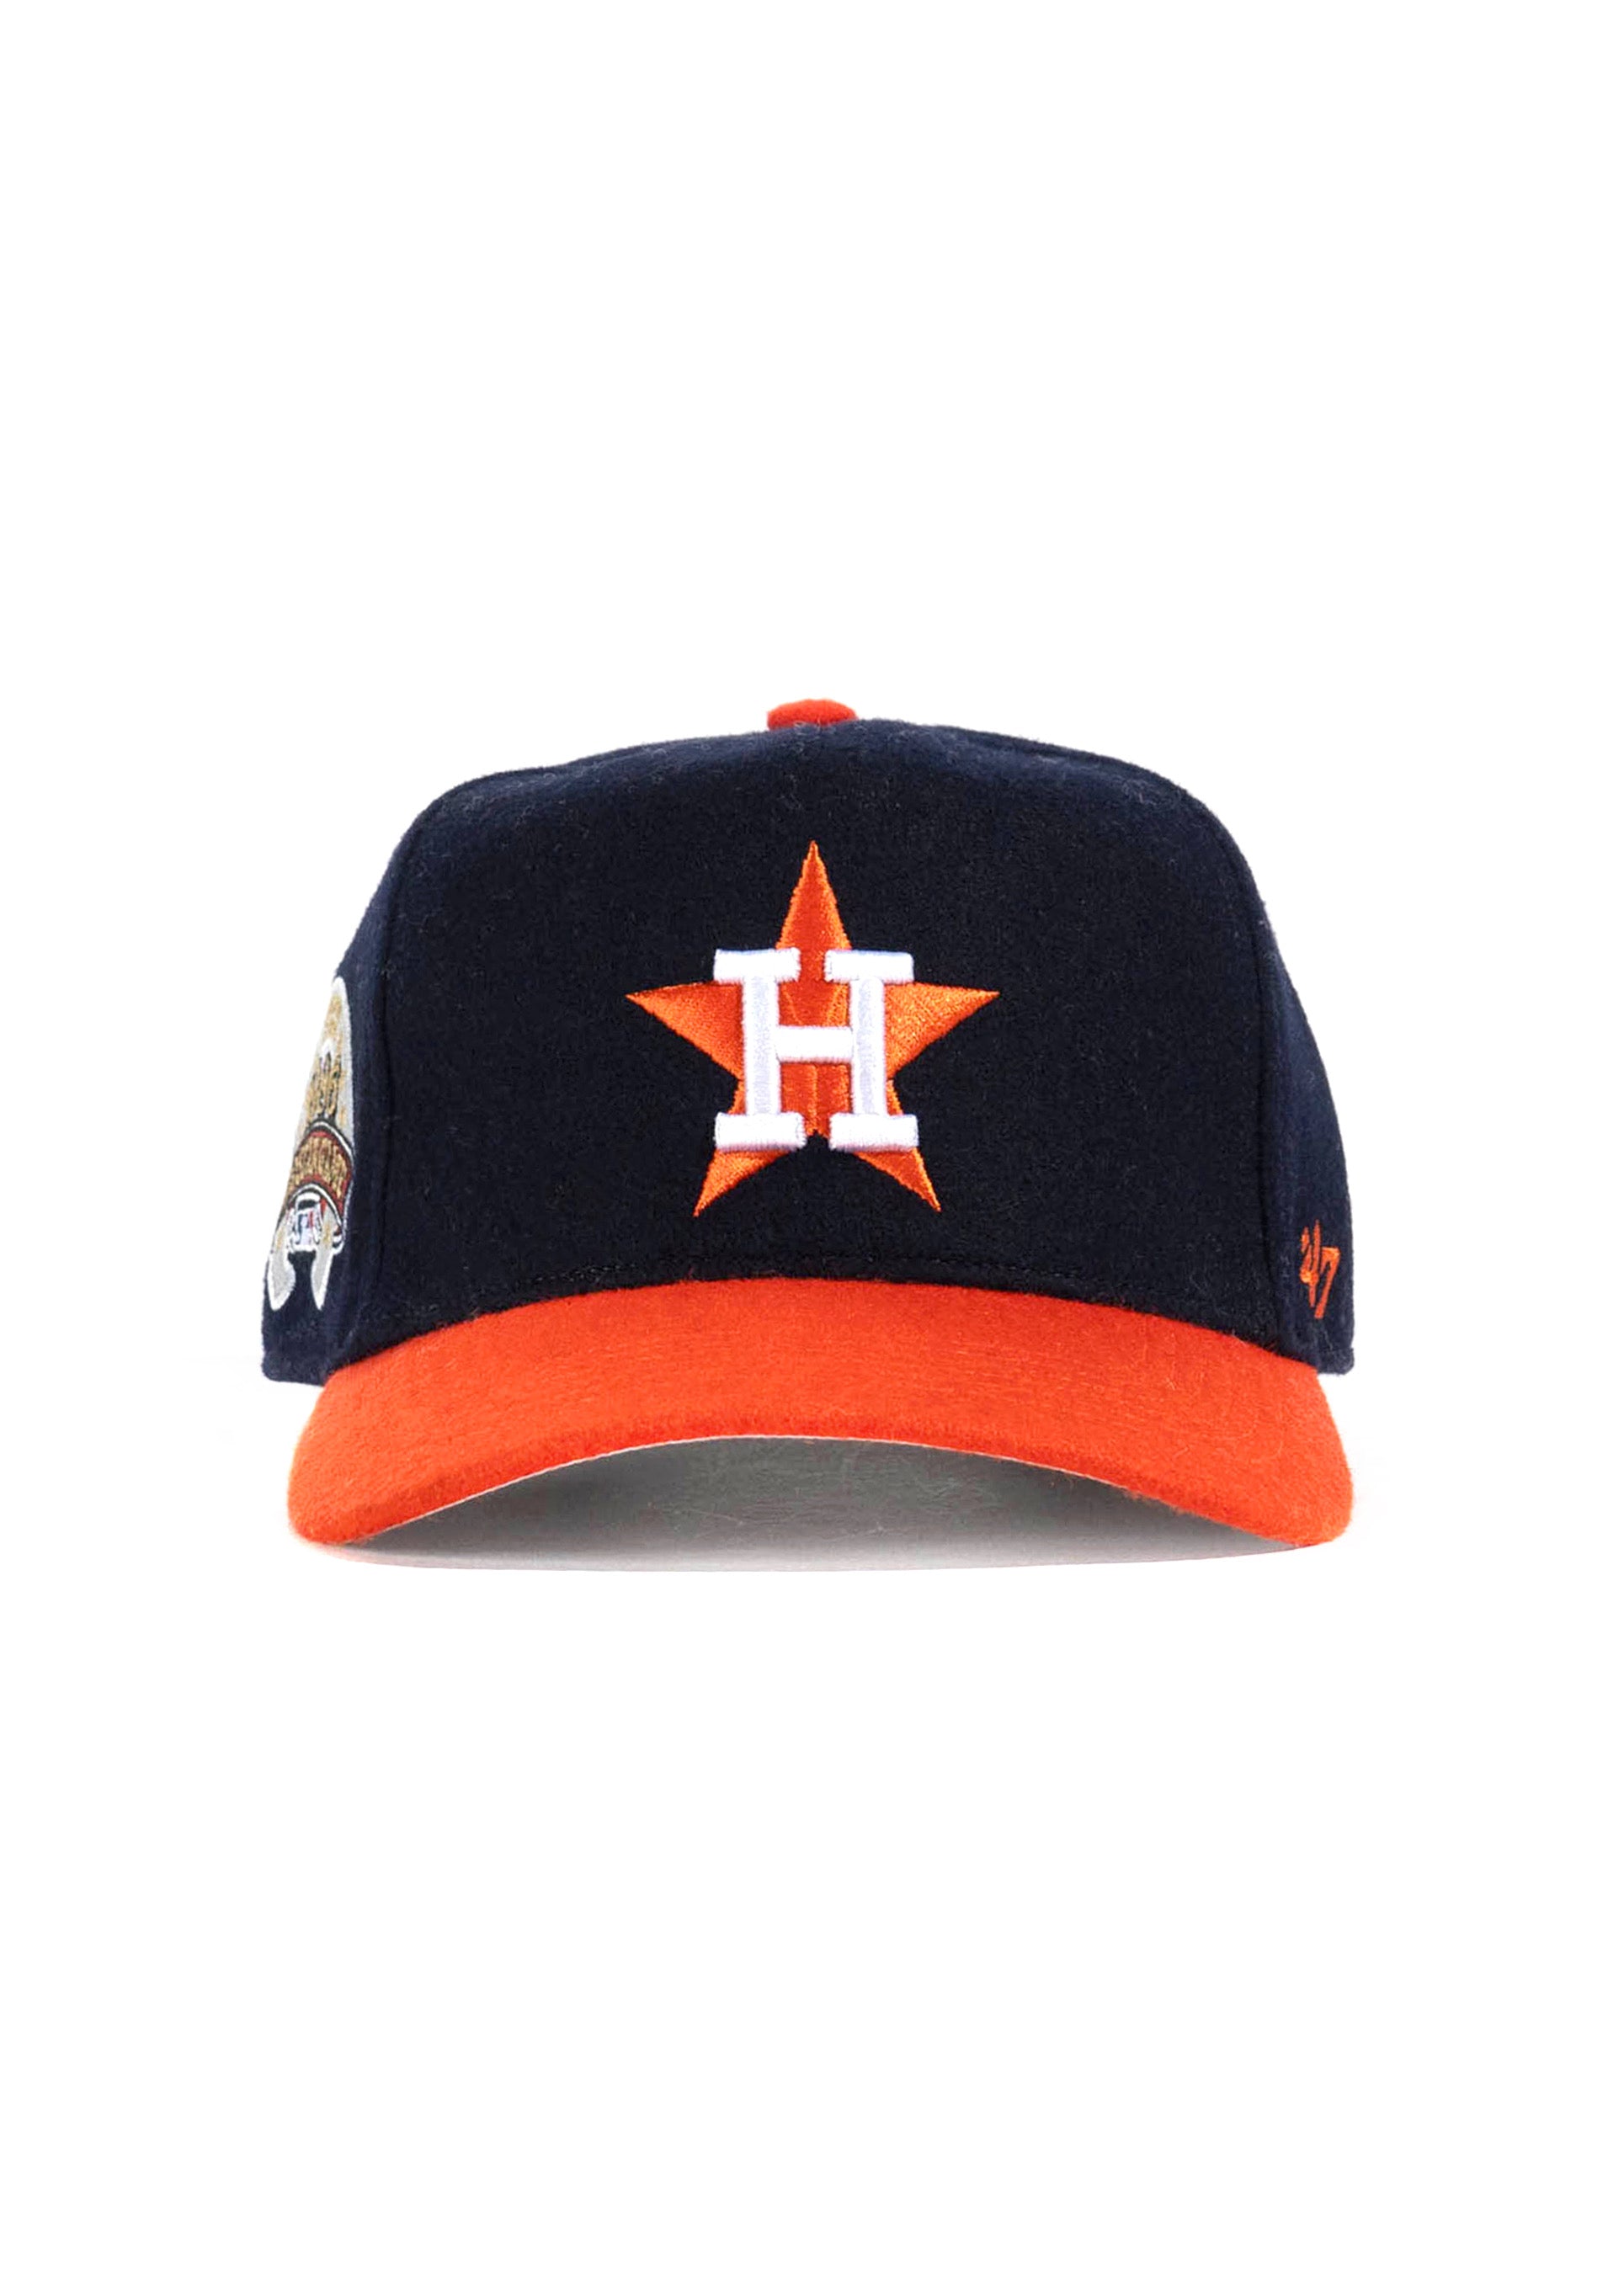 Astros '47 HITCH - Navy/Orange